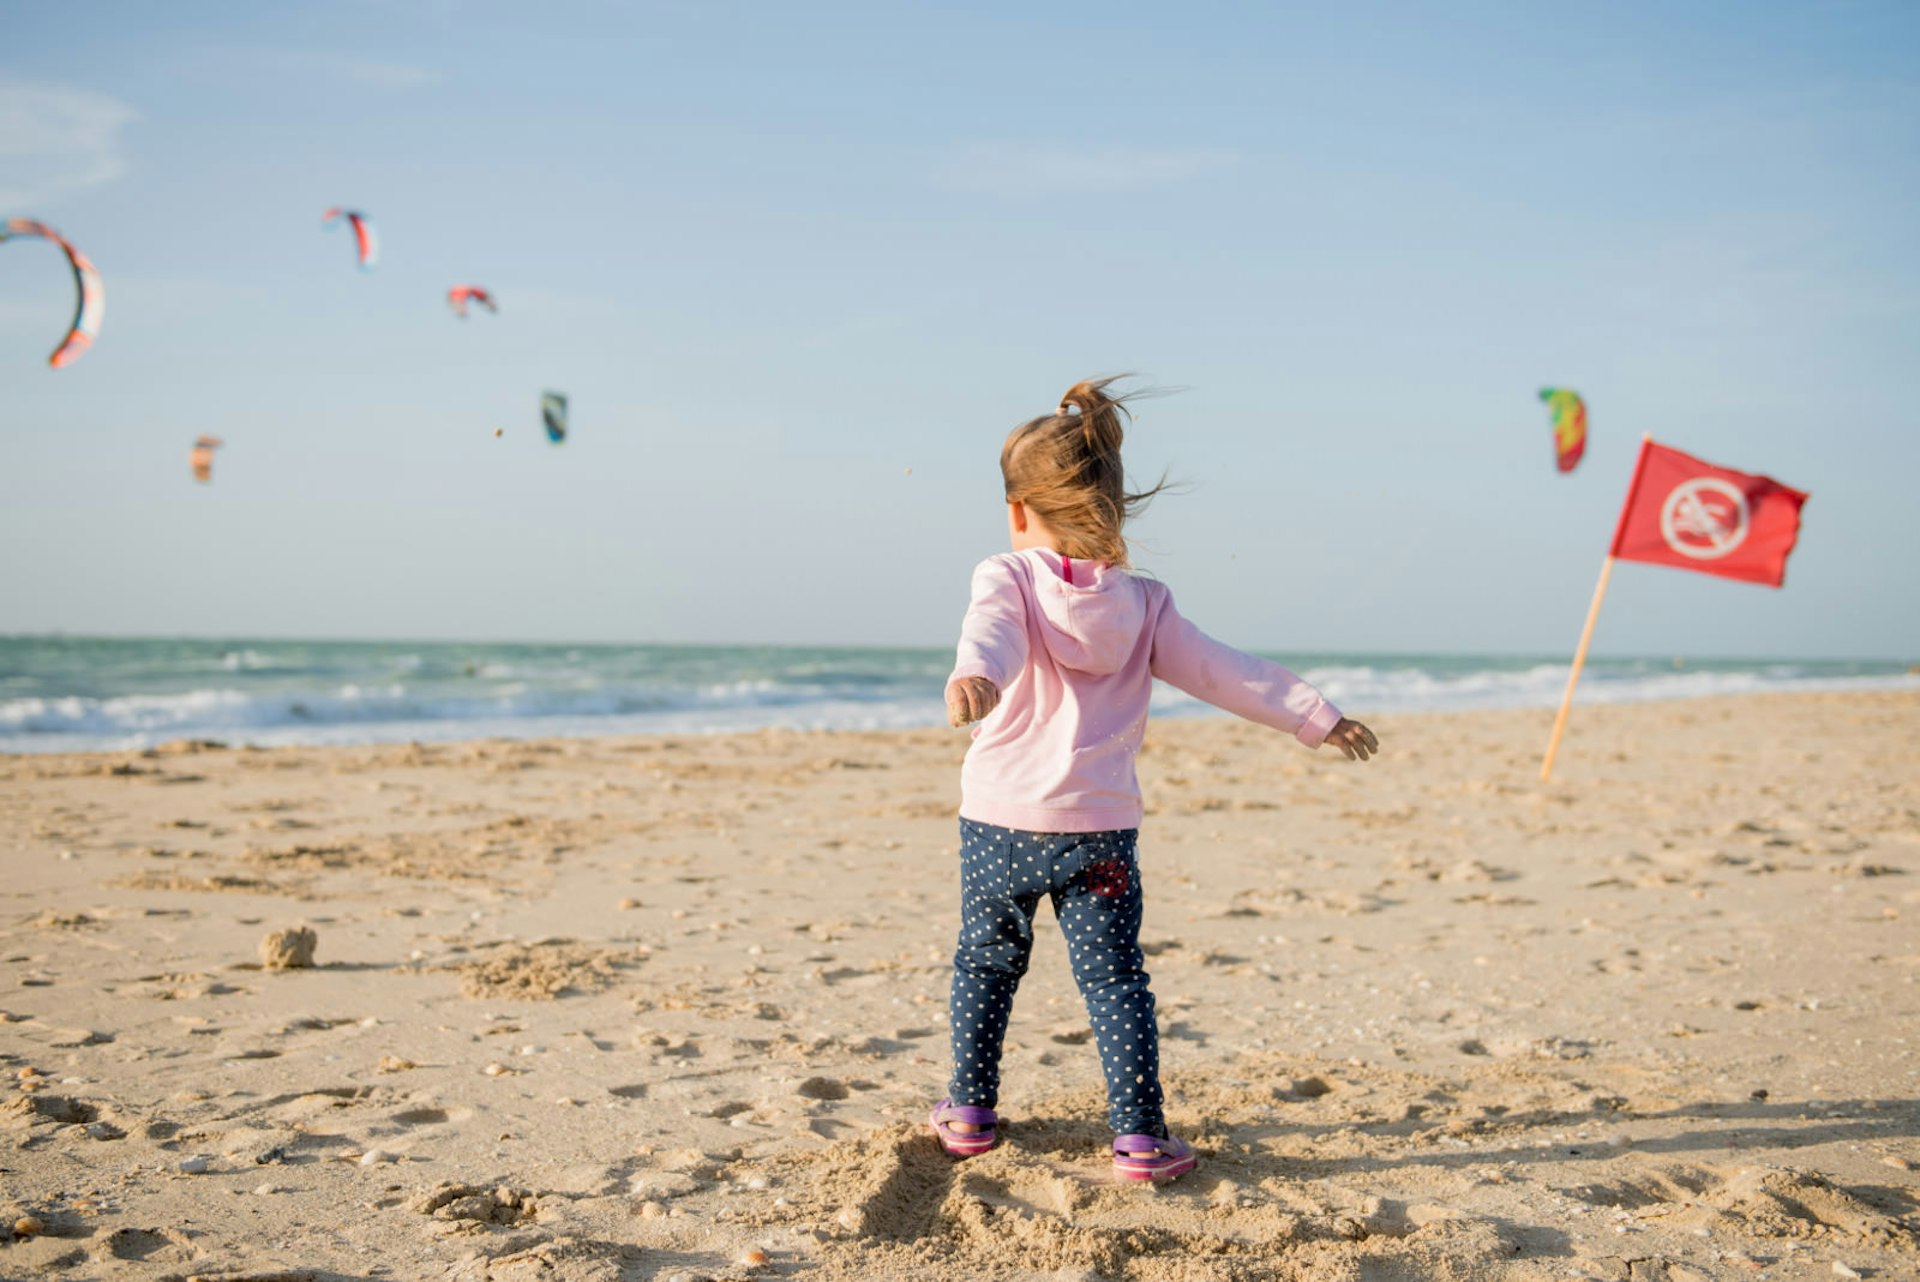 Child playing on Kite Beach, Dubai, United Arab Emirates